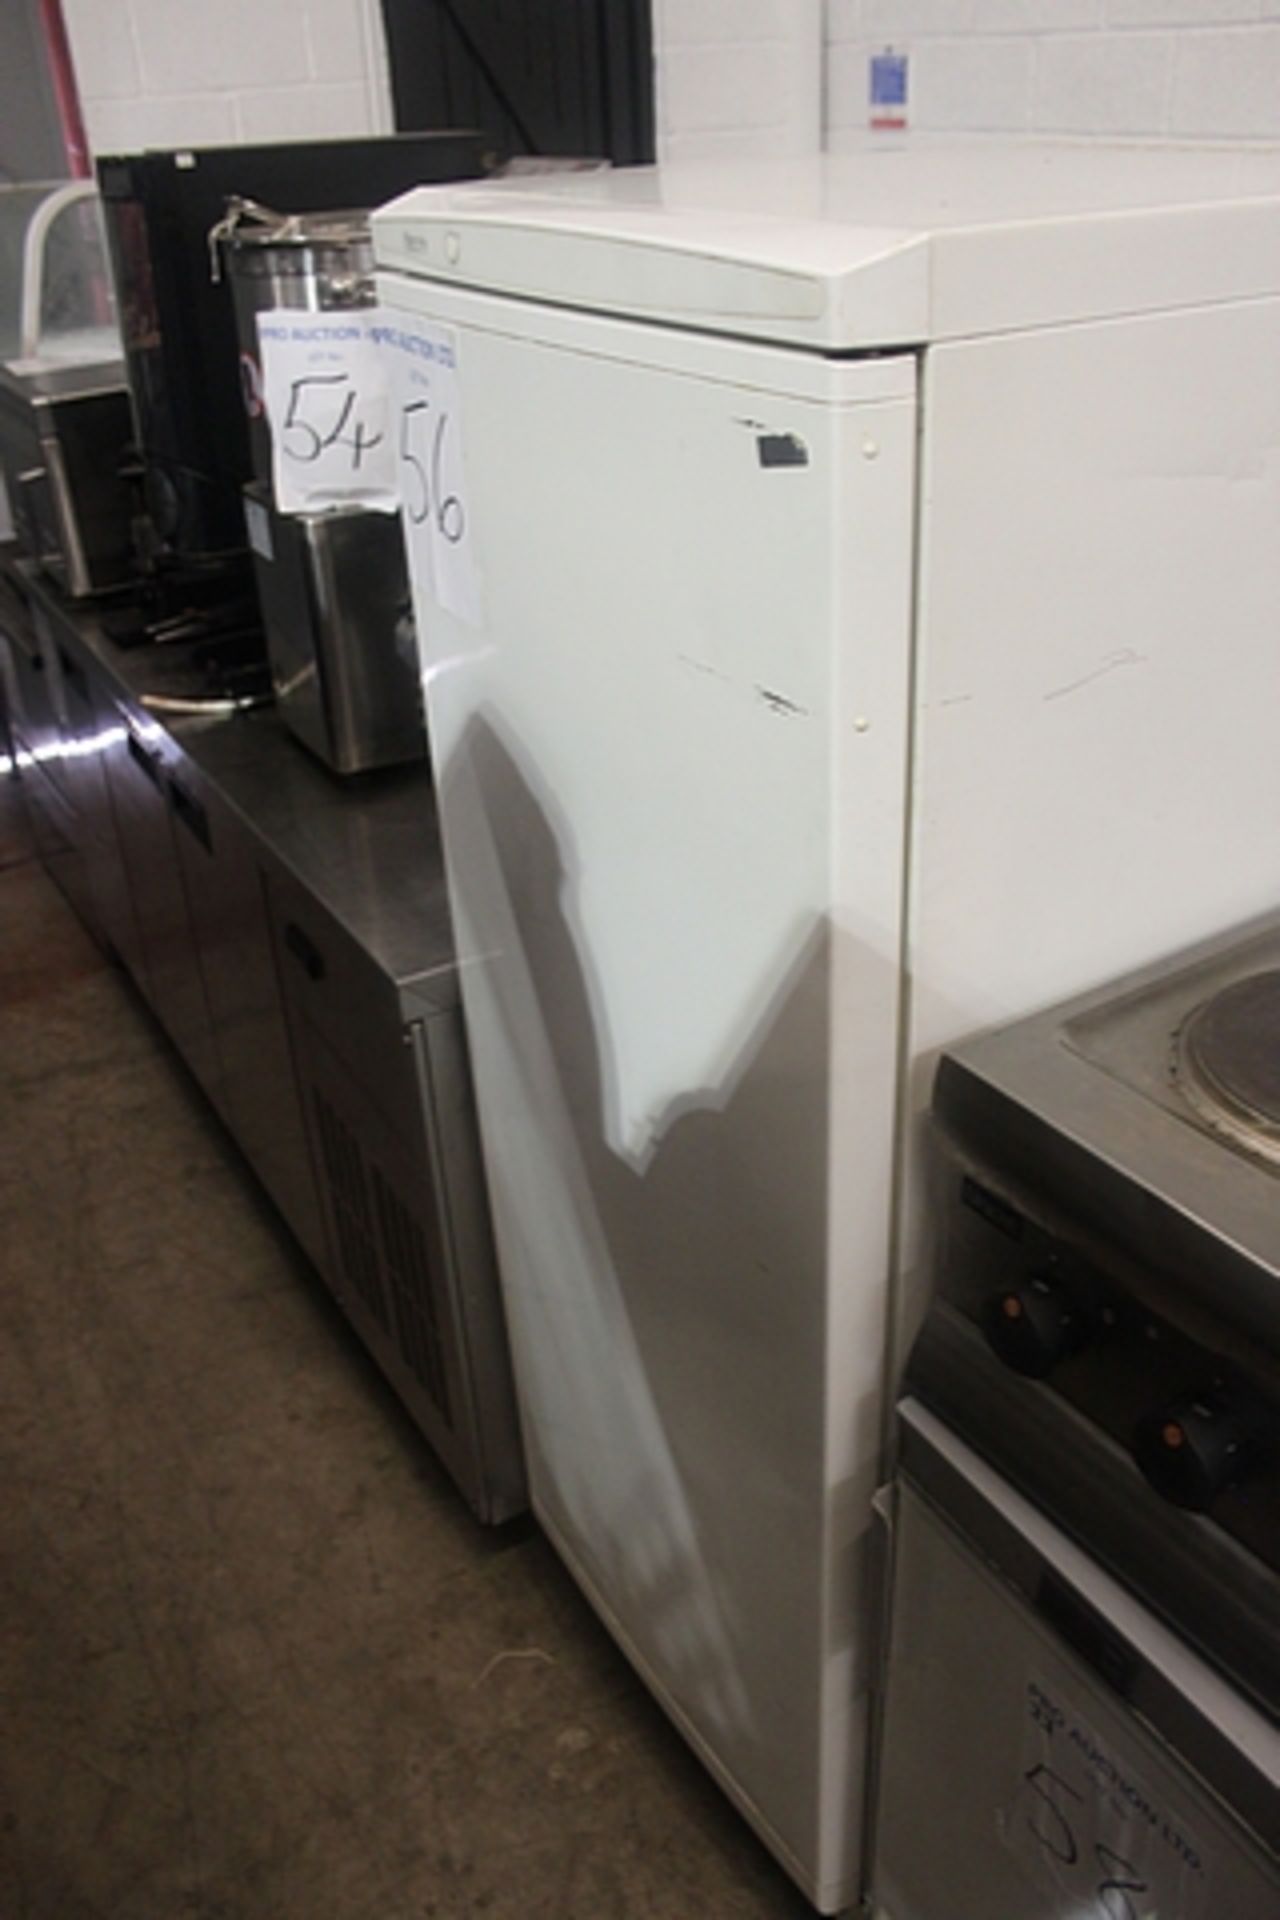 Servis M7611 freestanding larder fridge 311 litre capacity 600mm x 600mm x 1790mm